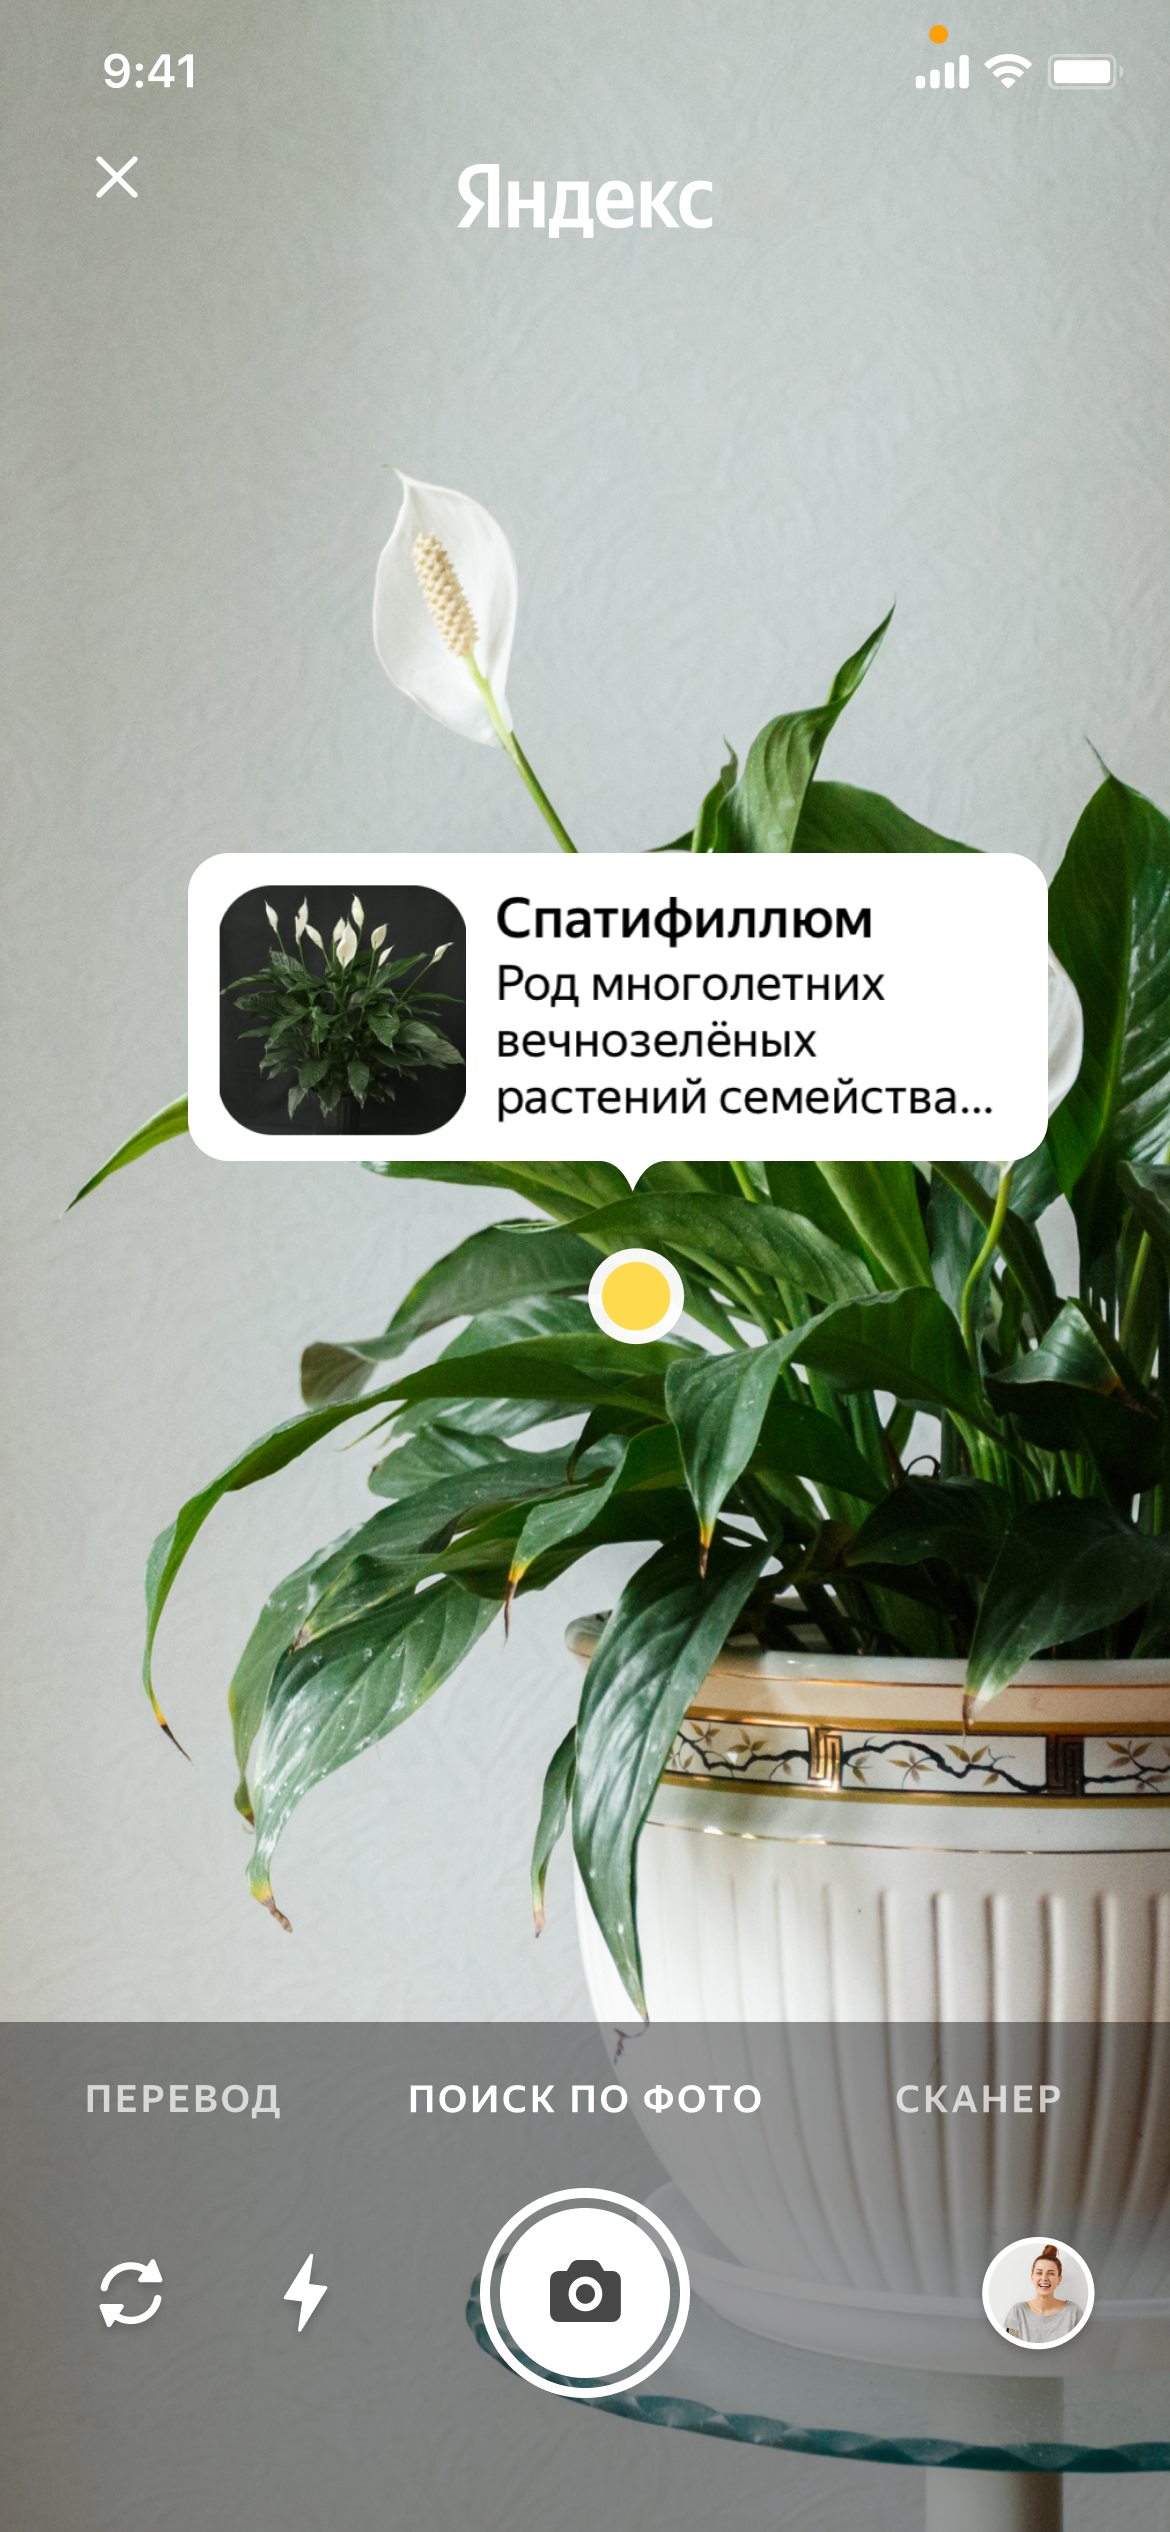 Яндекс Опознать По Фото